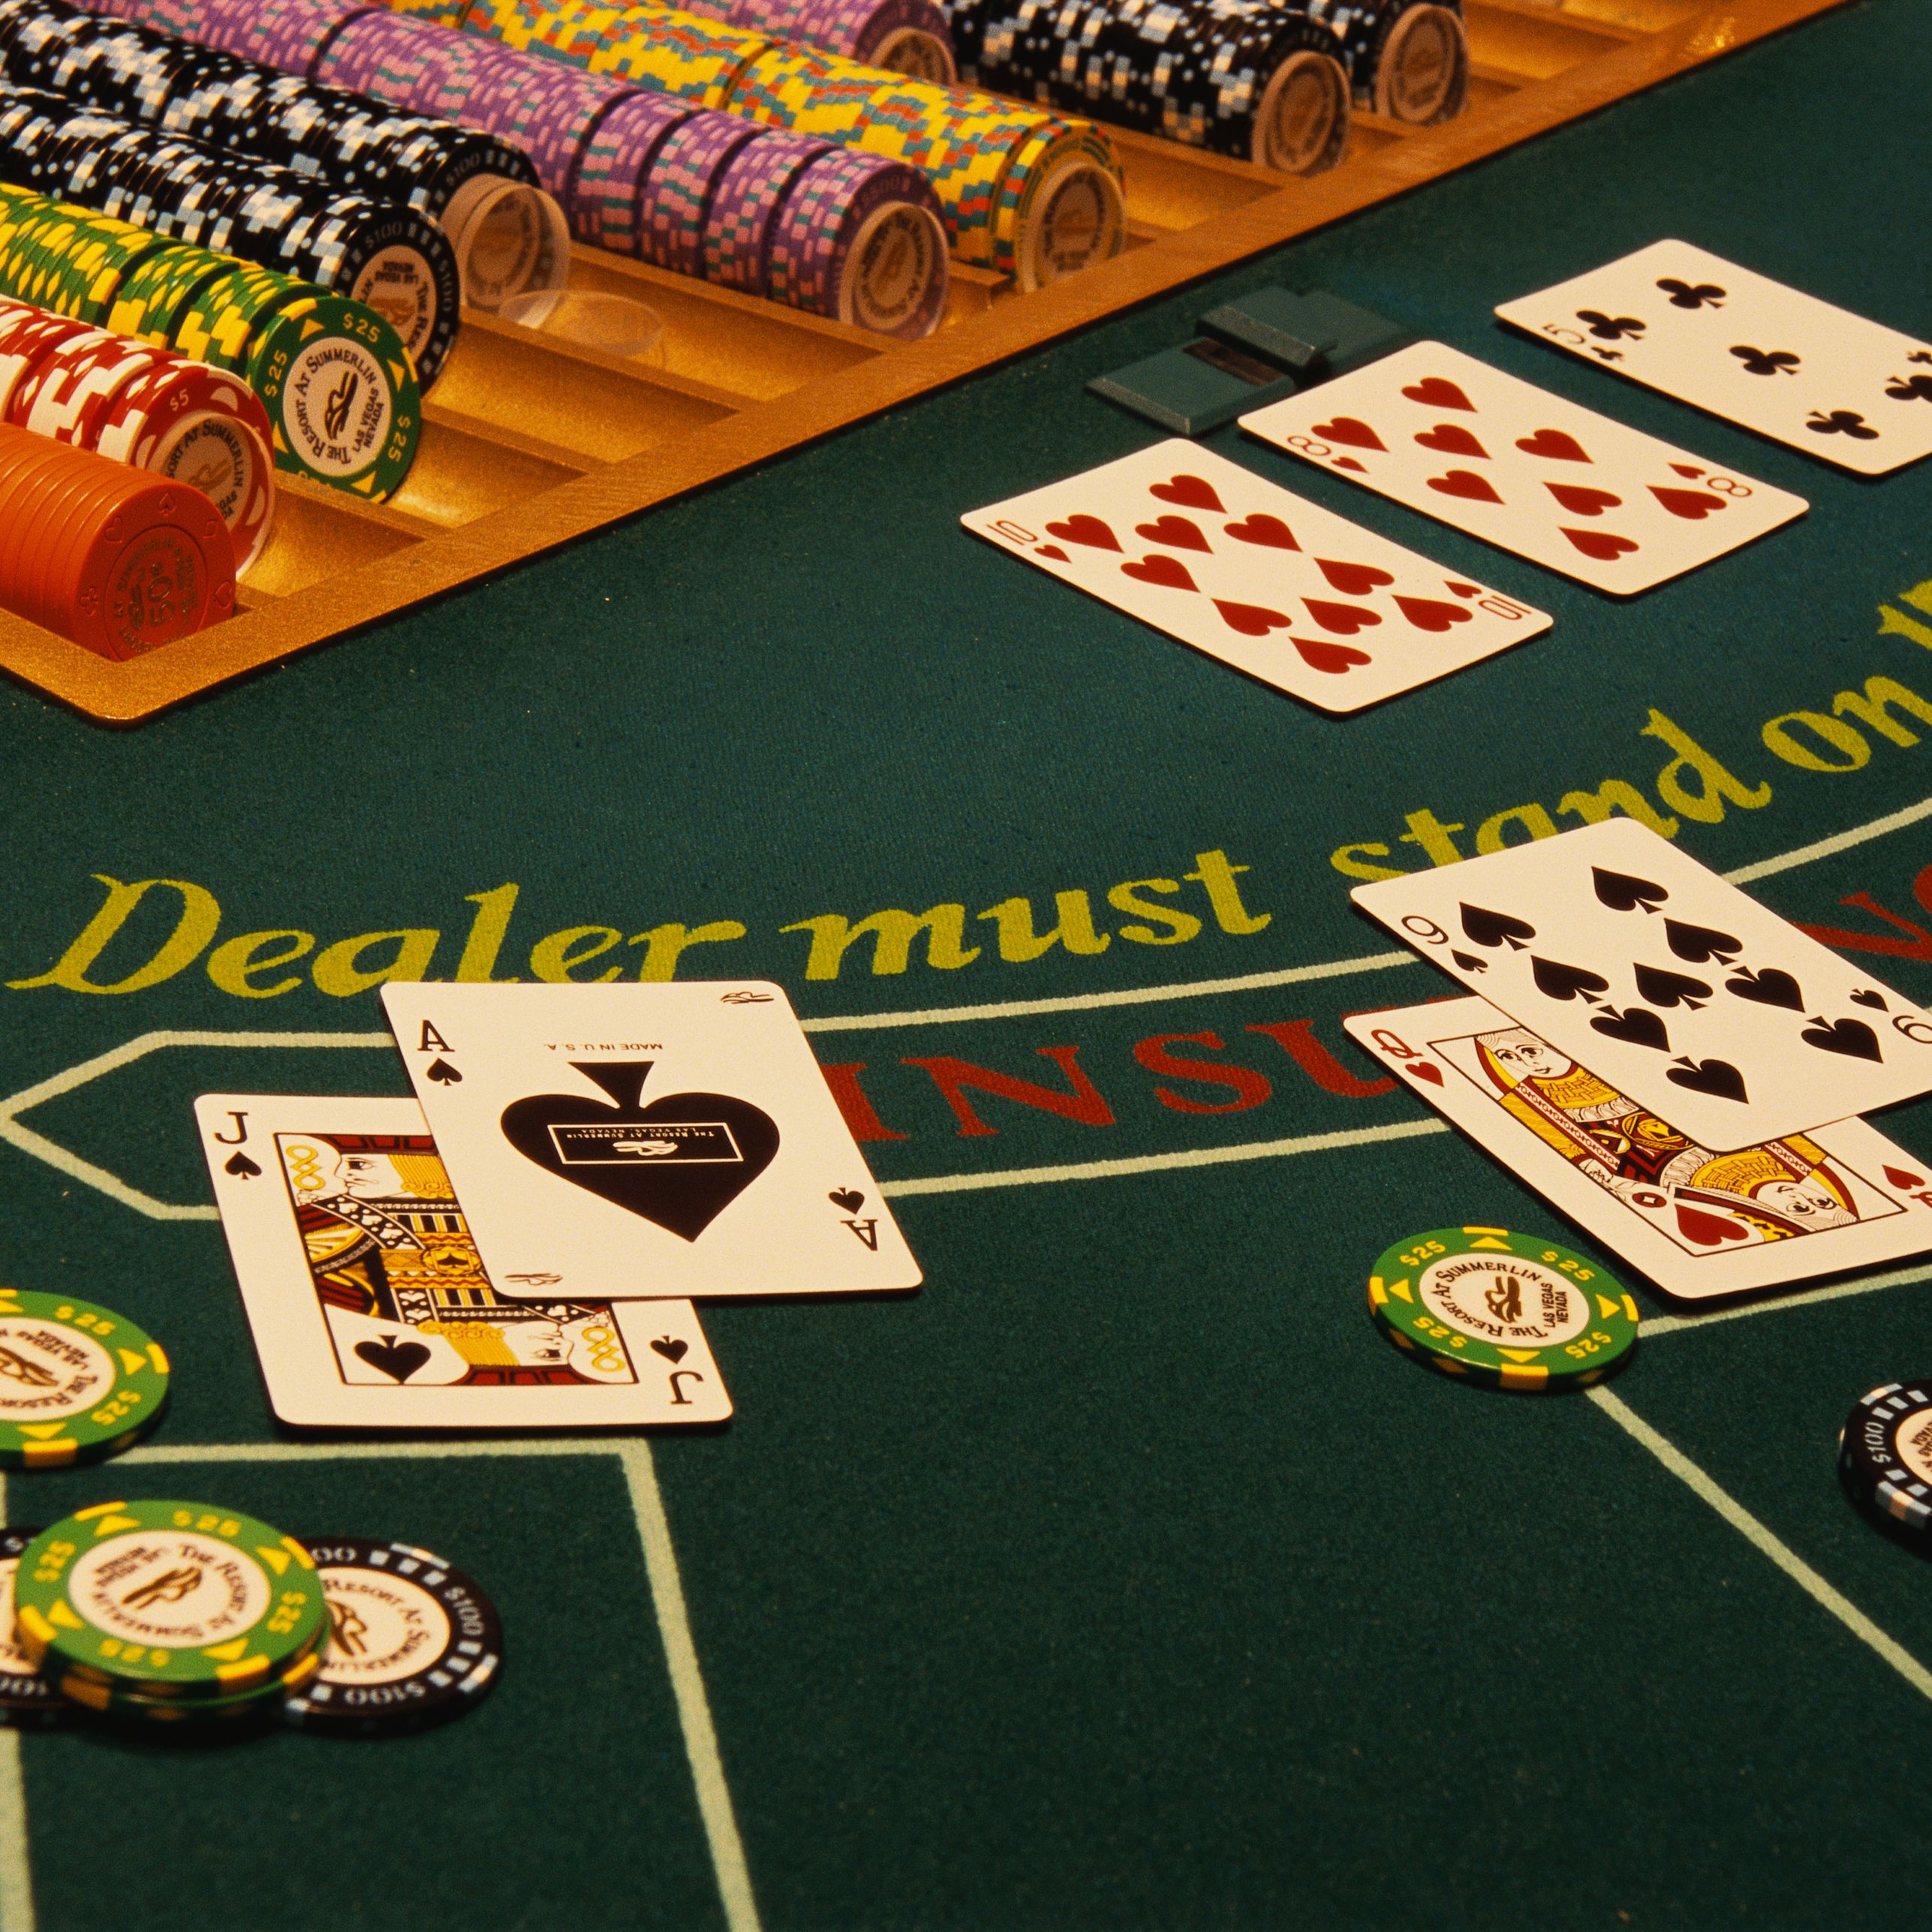 winning-blackjack-hand-on-casino-table-520257696-58979c263df78caebc19a6e7.jpg